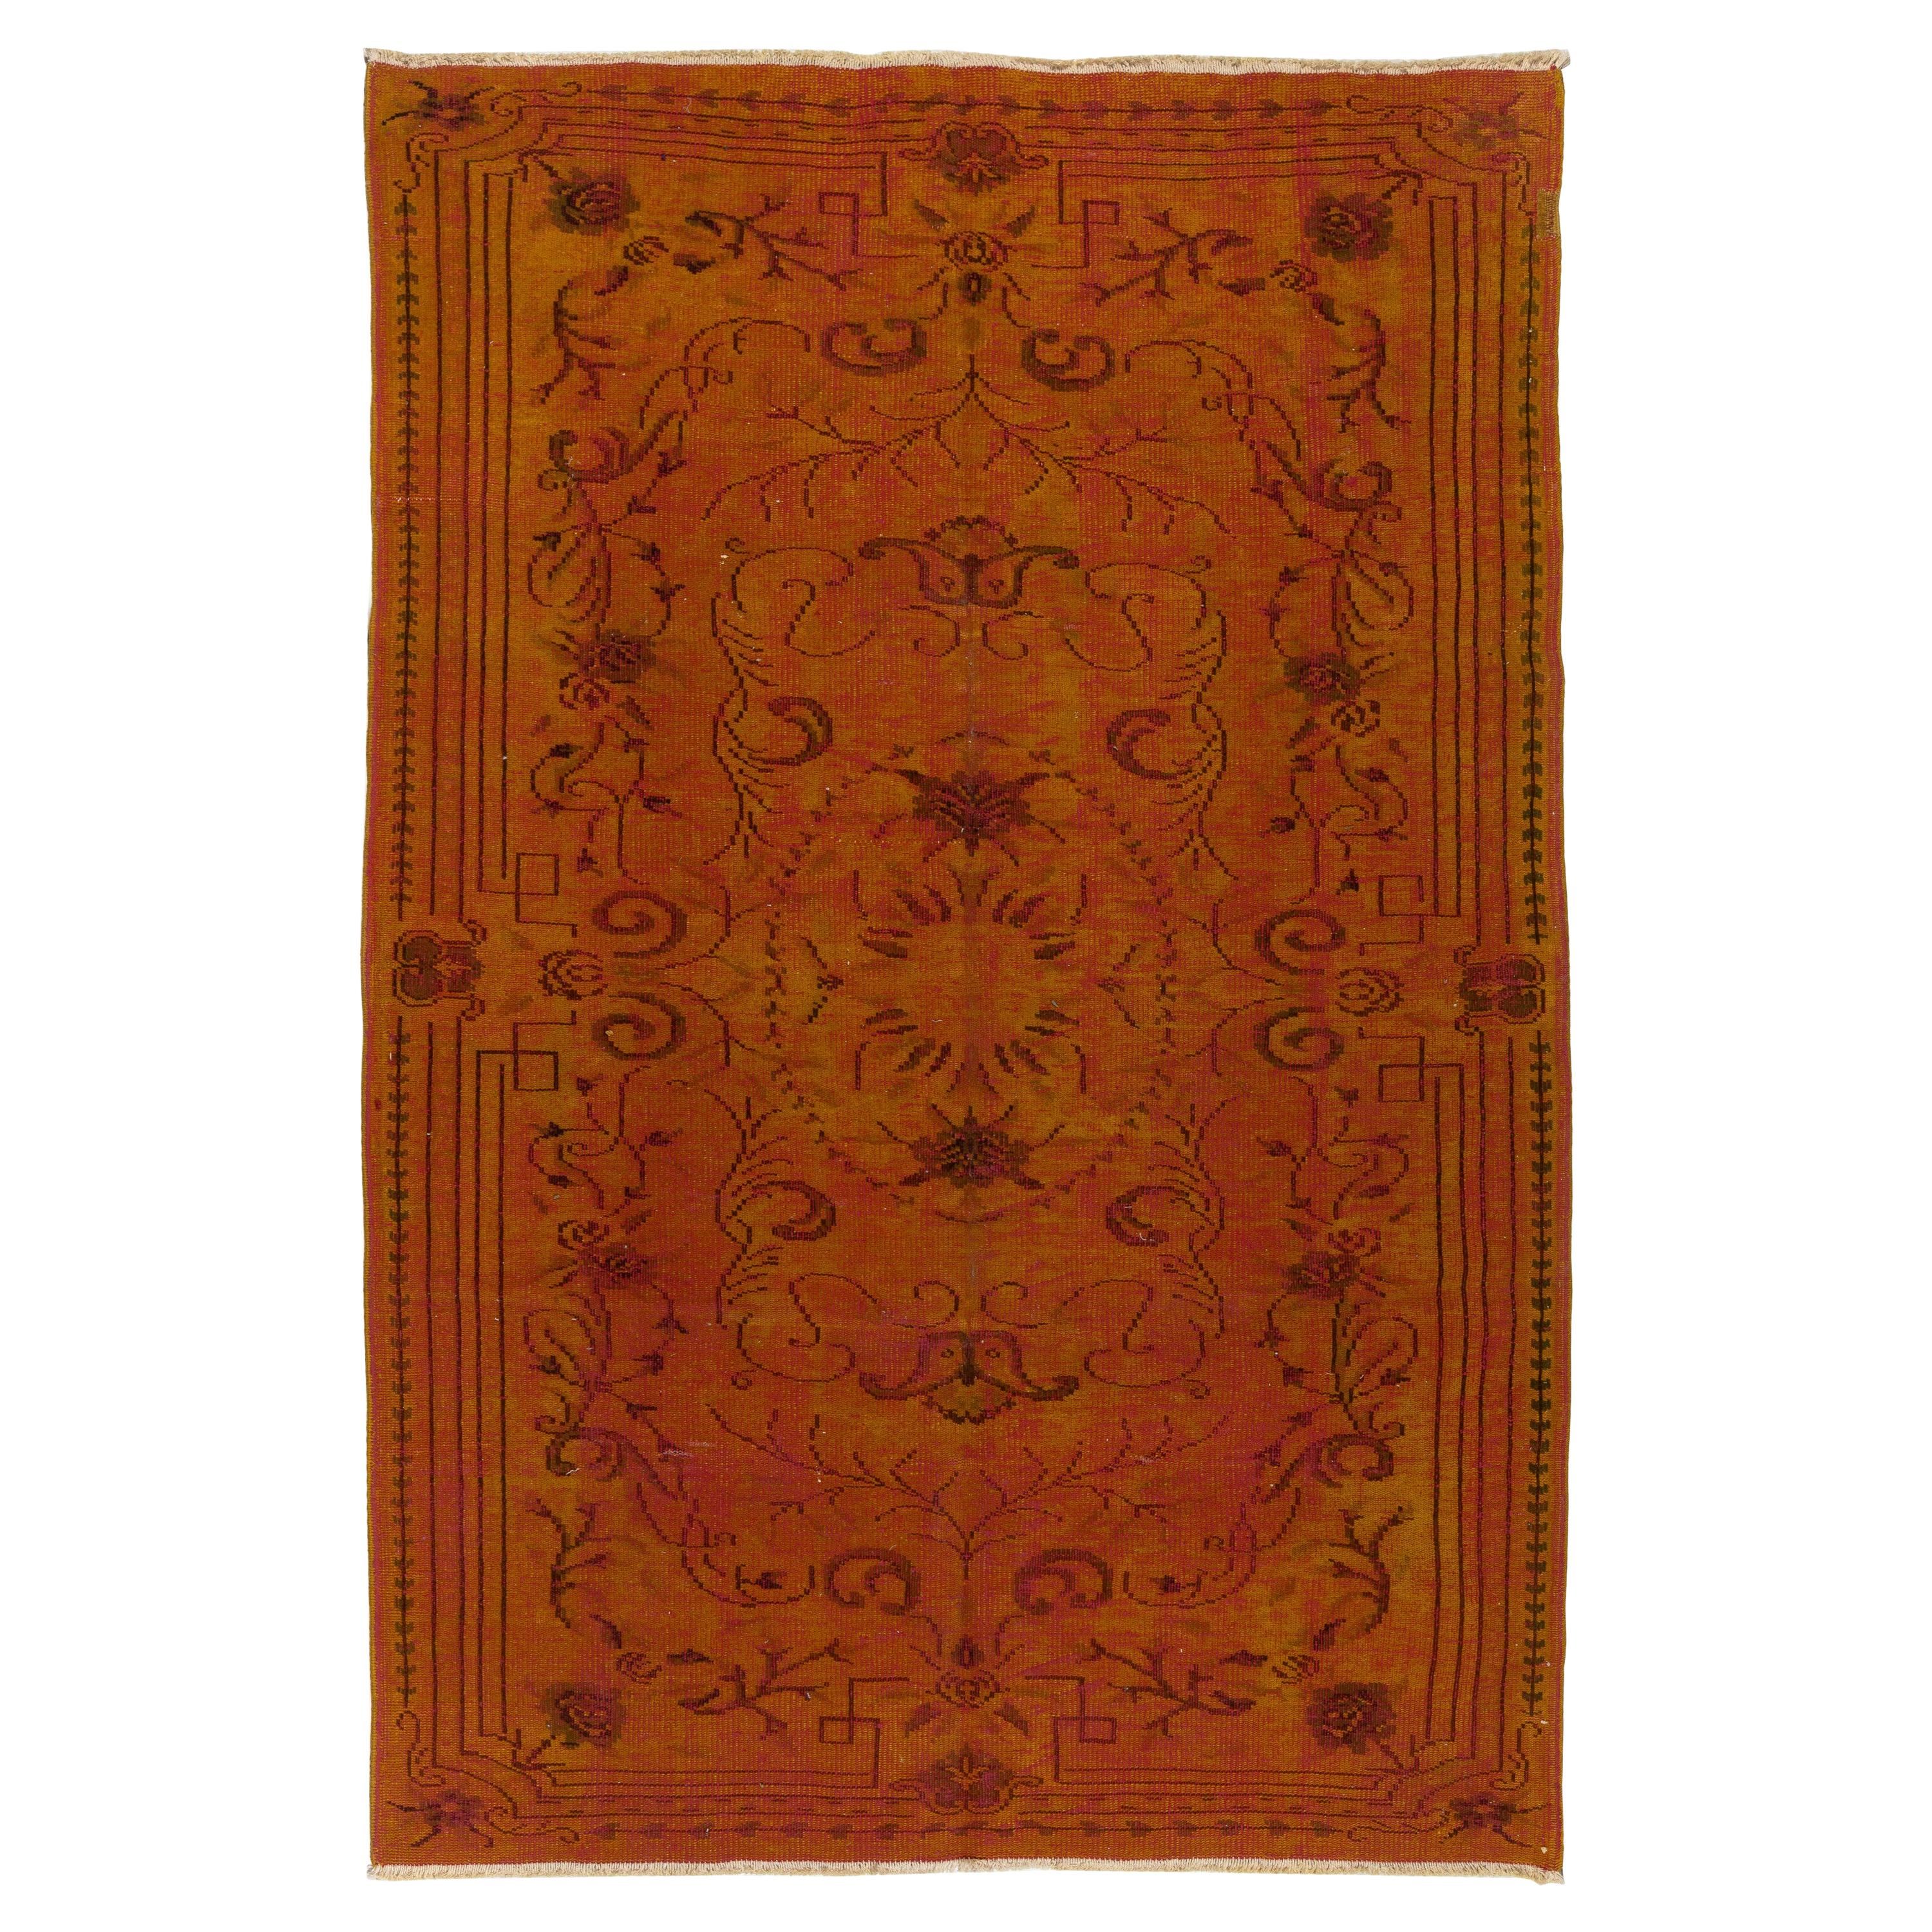 6x8.8 Ft Hand-Knotted Anatolian Rug in Burnt Orange, Modern Living Room Carpet